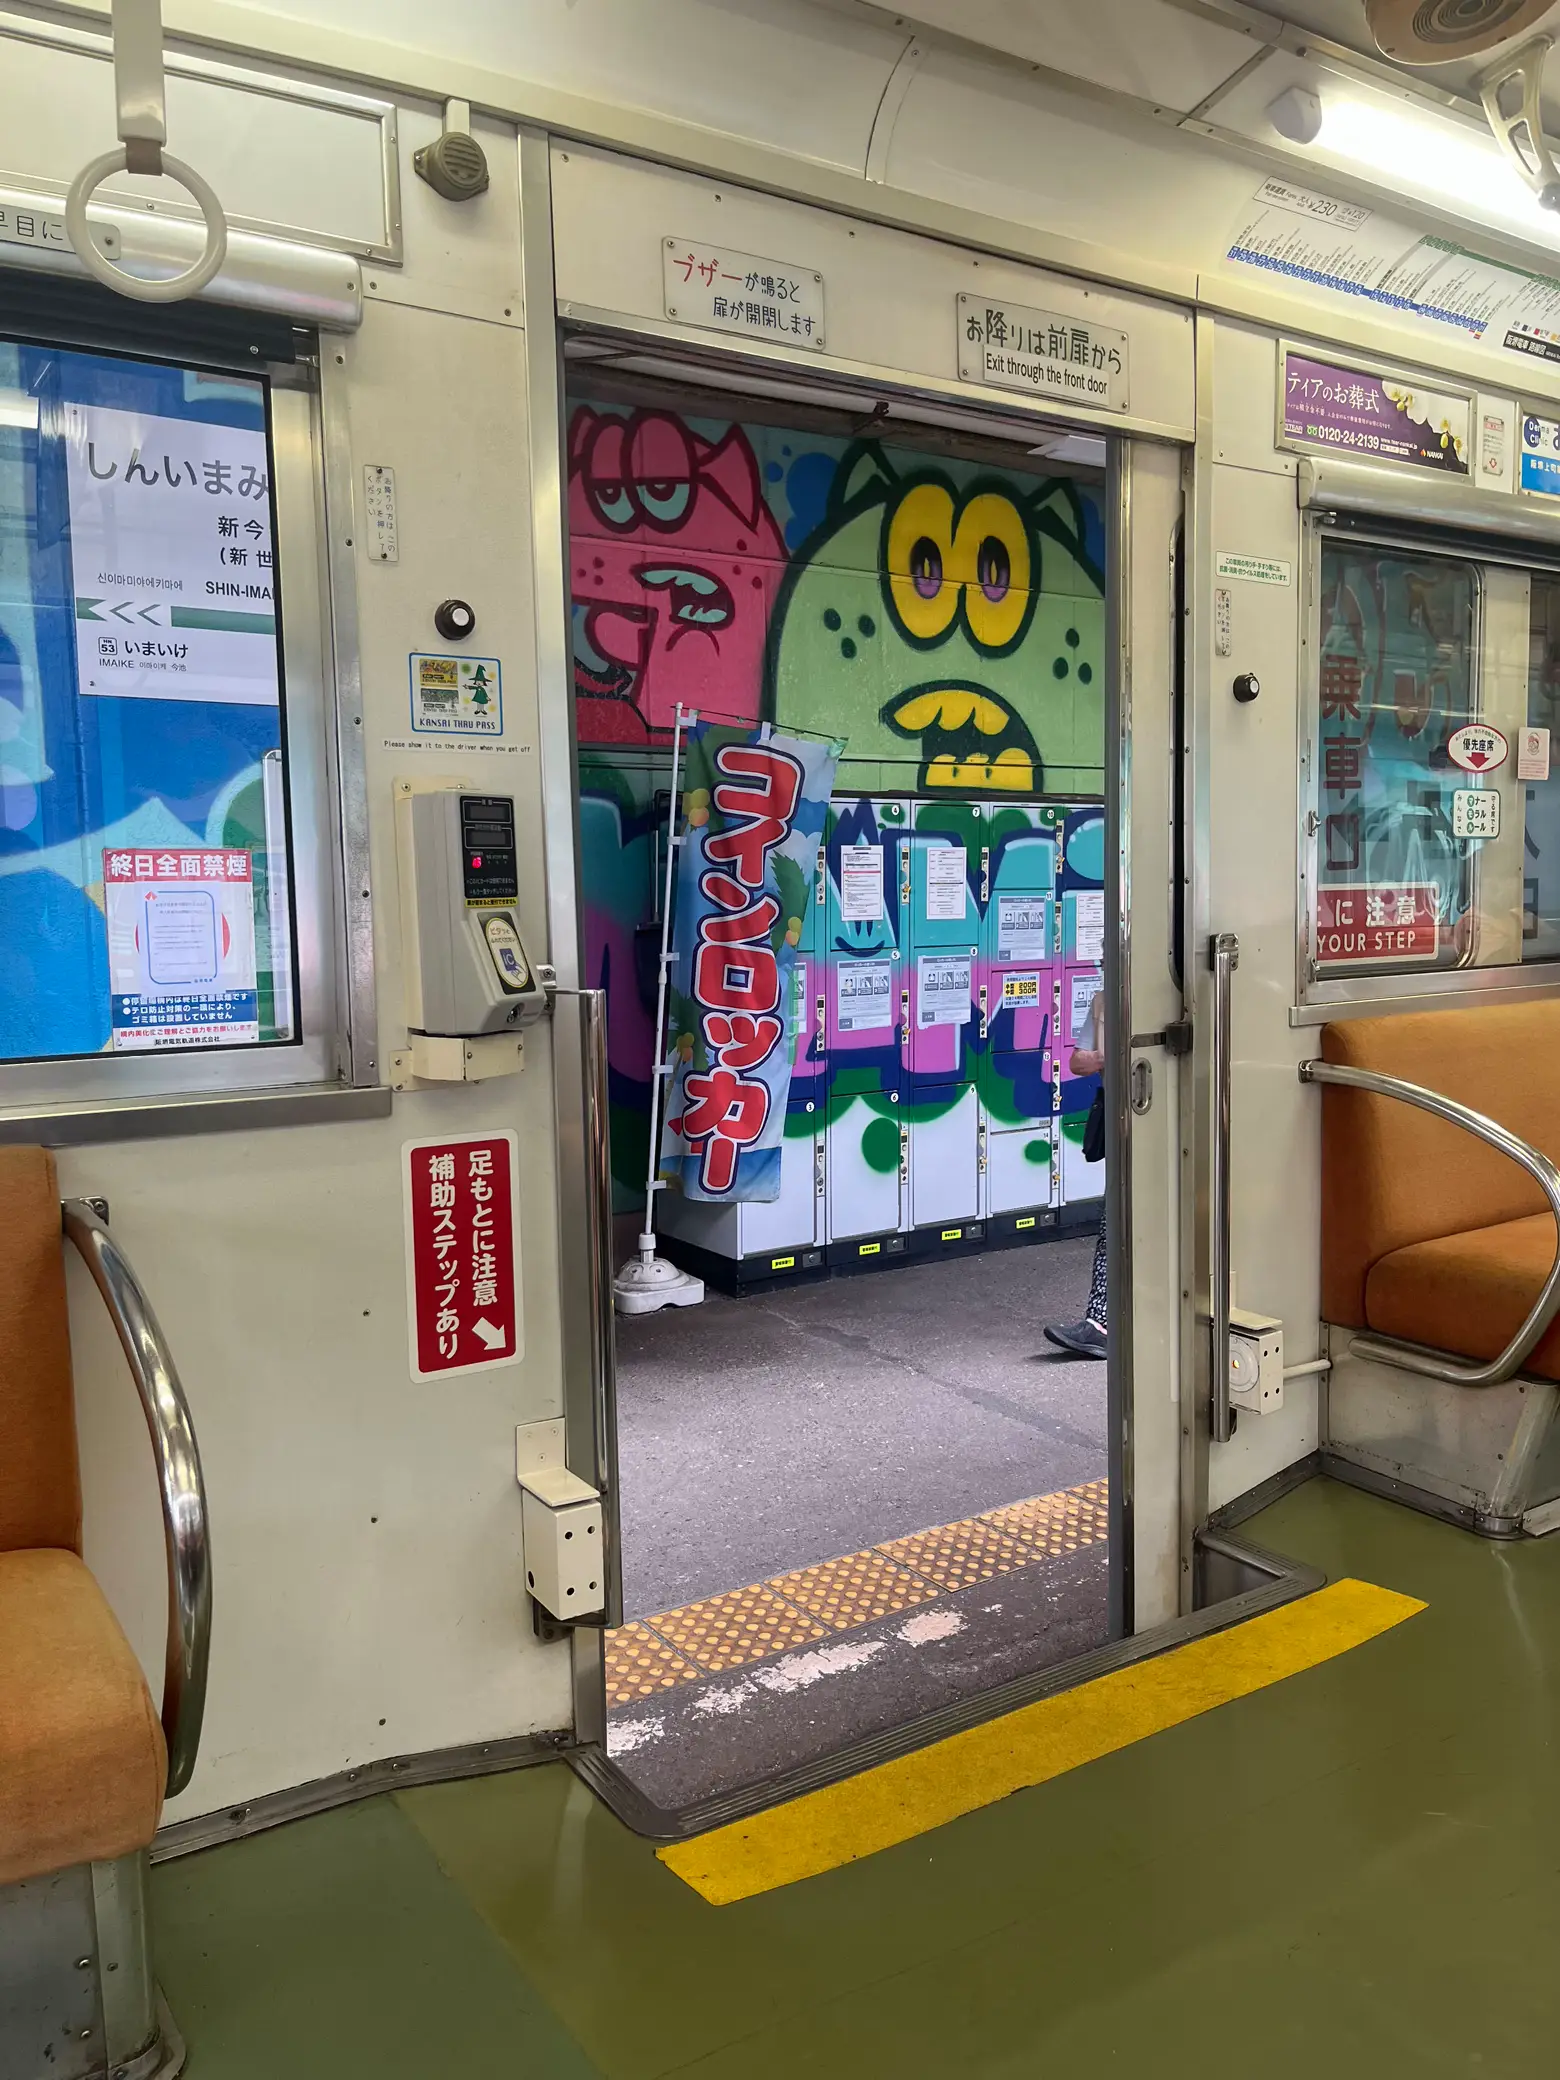 Sakakai Tram, Shin-Imamiya Station | Gallery posted by qp ayataka